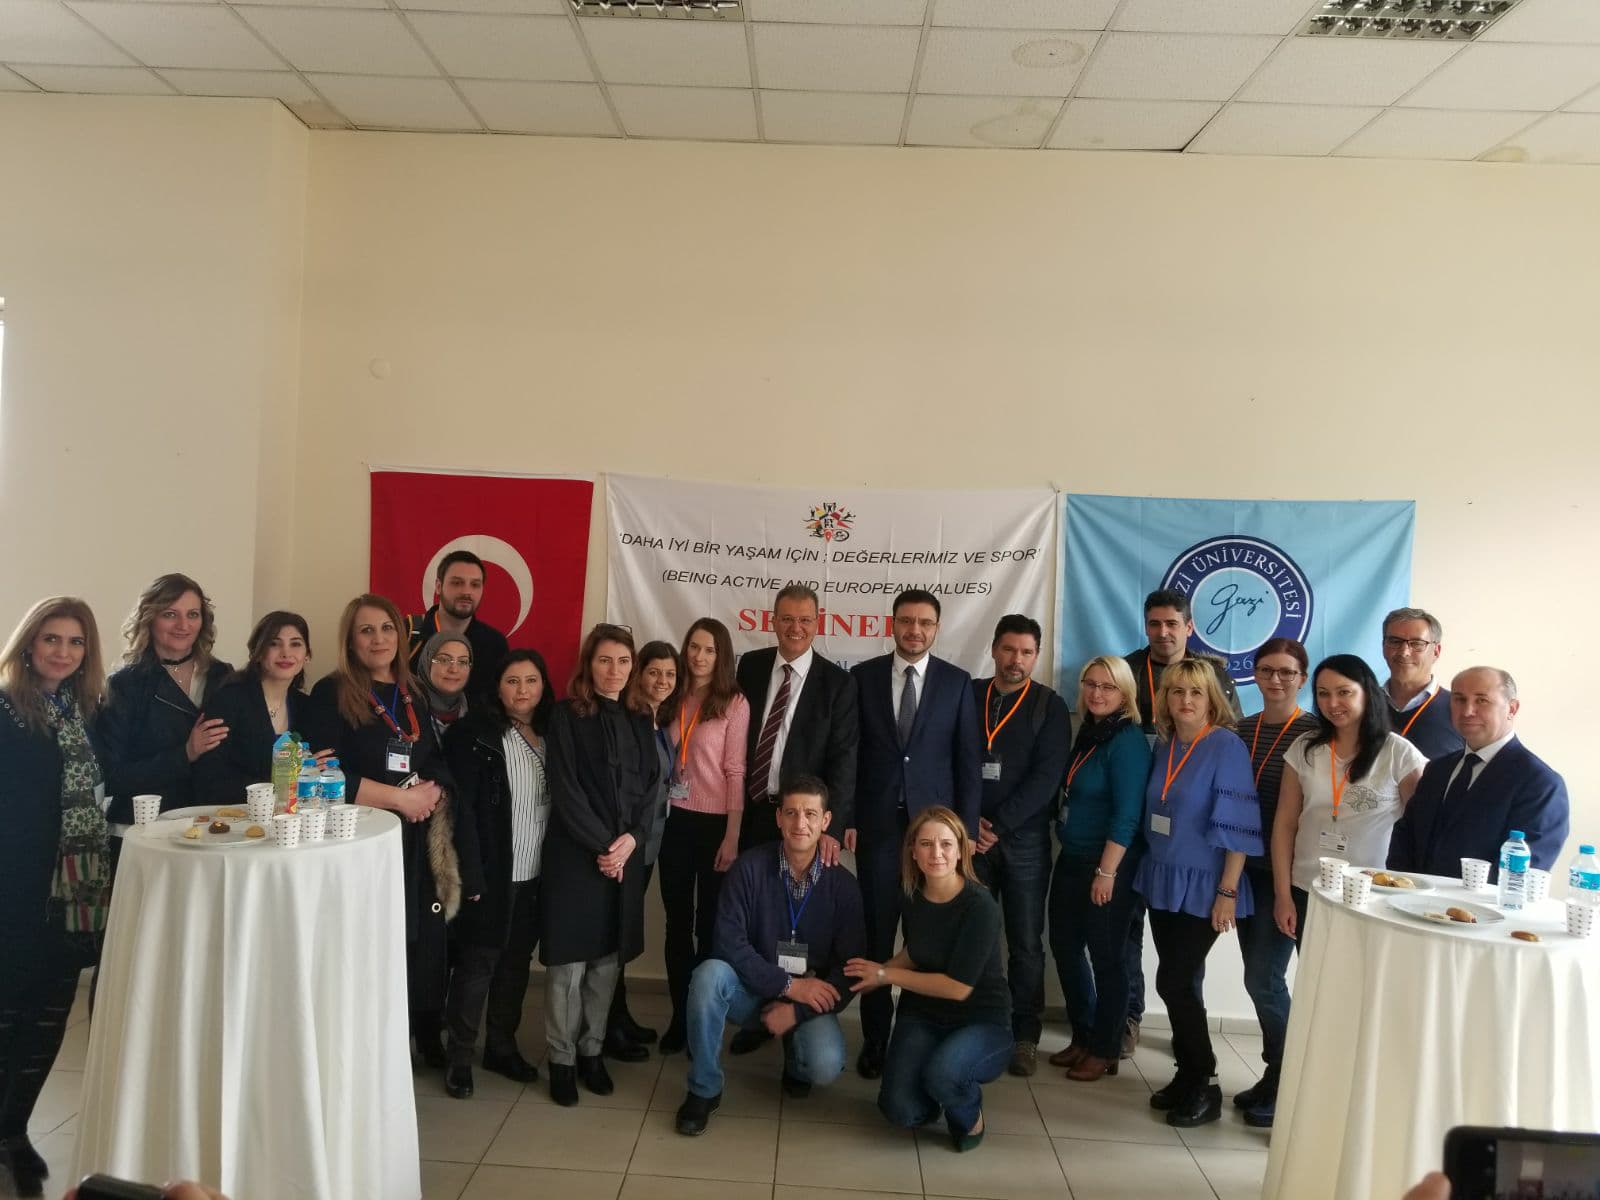 Atatürk Faculty of Education Dean Professor Ismail Hakkı Mirici participated in the Seminar on EV&PA Project As a Speaker